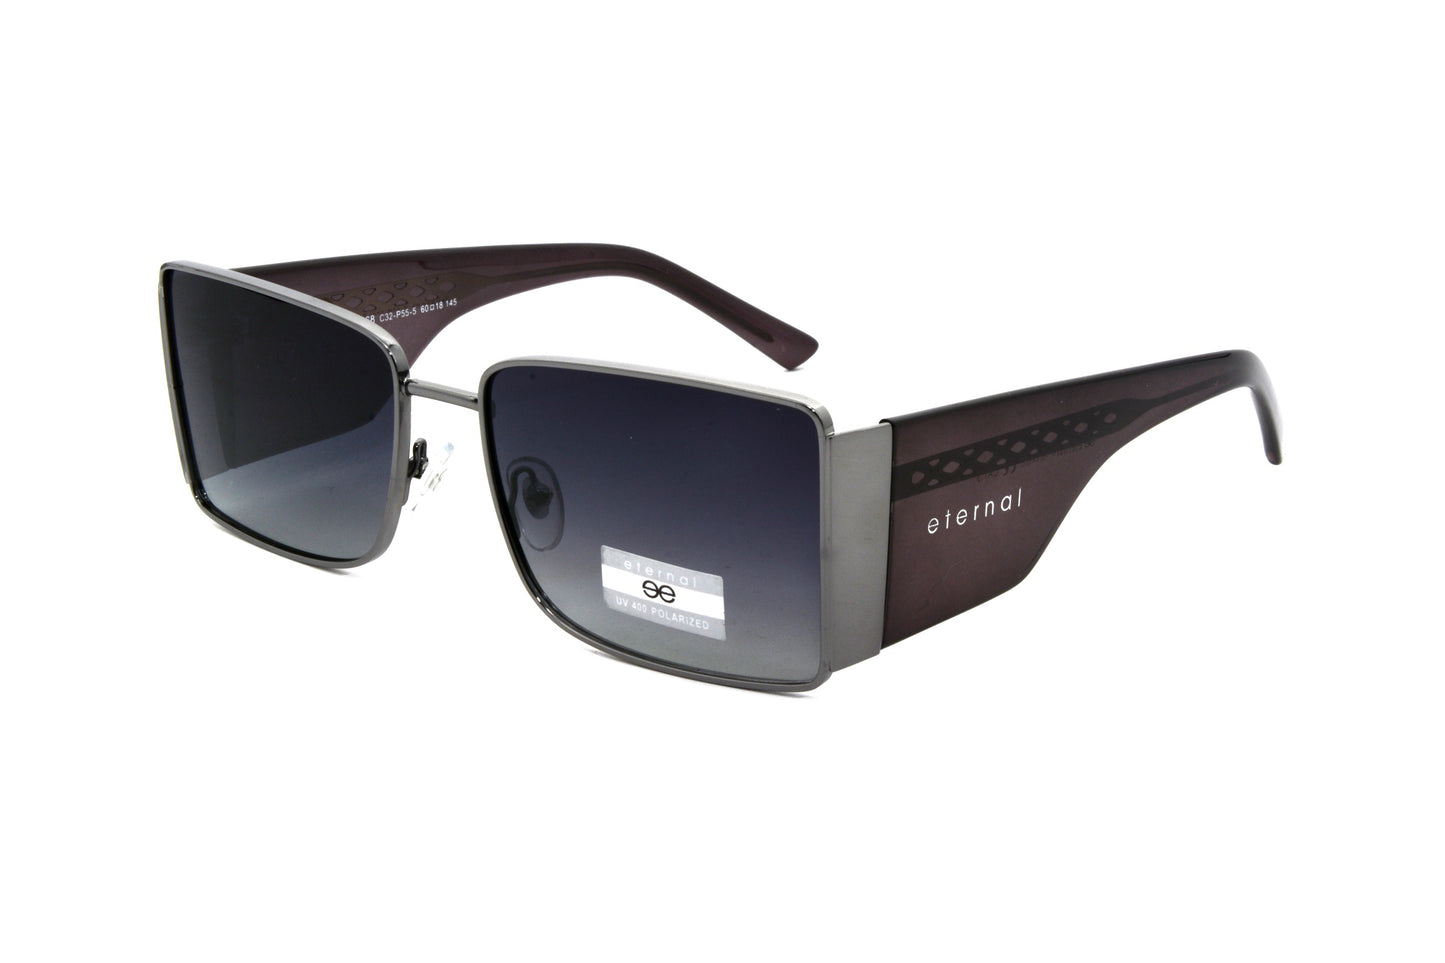 Eternal sunglasses 3368 C32-P55-5